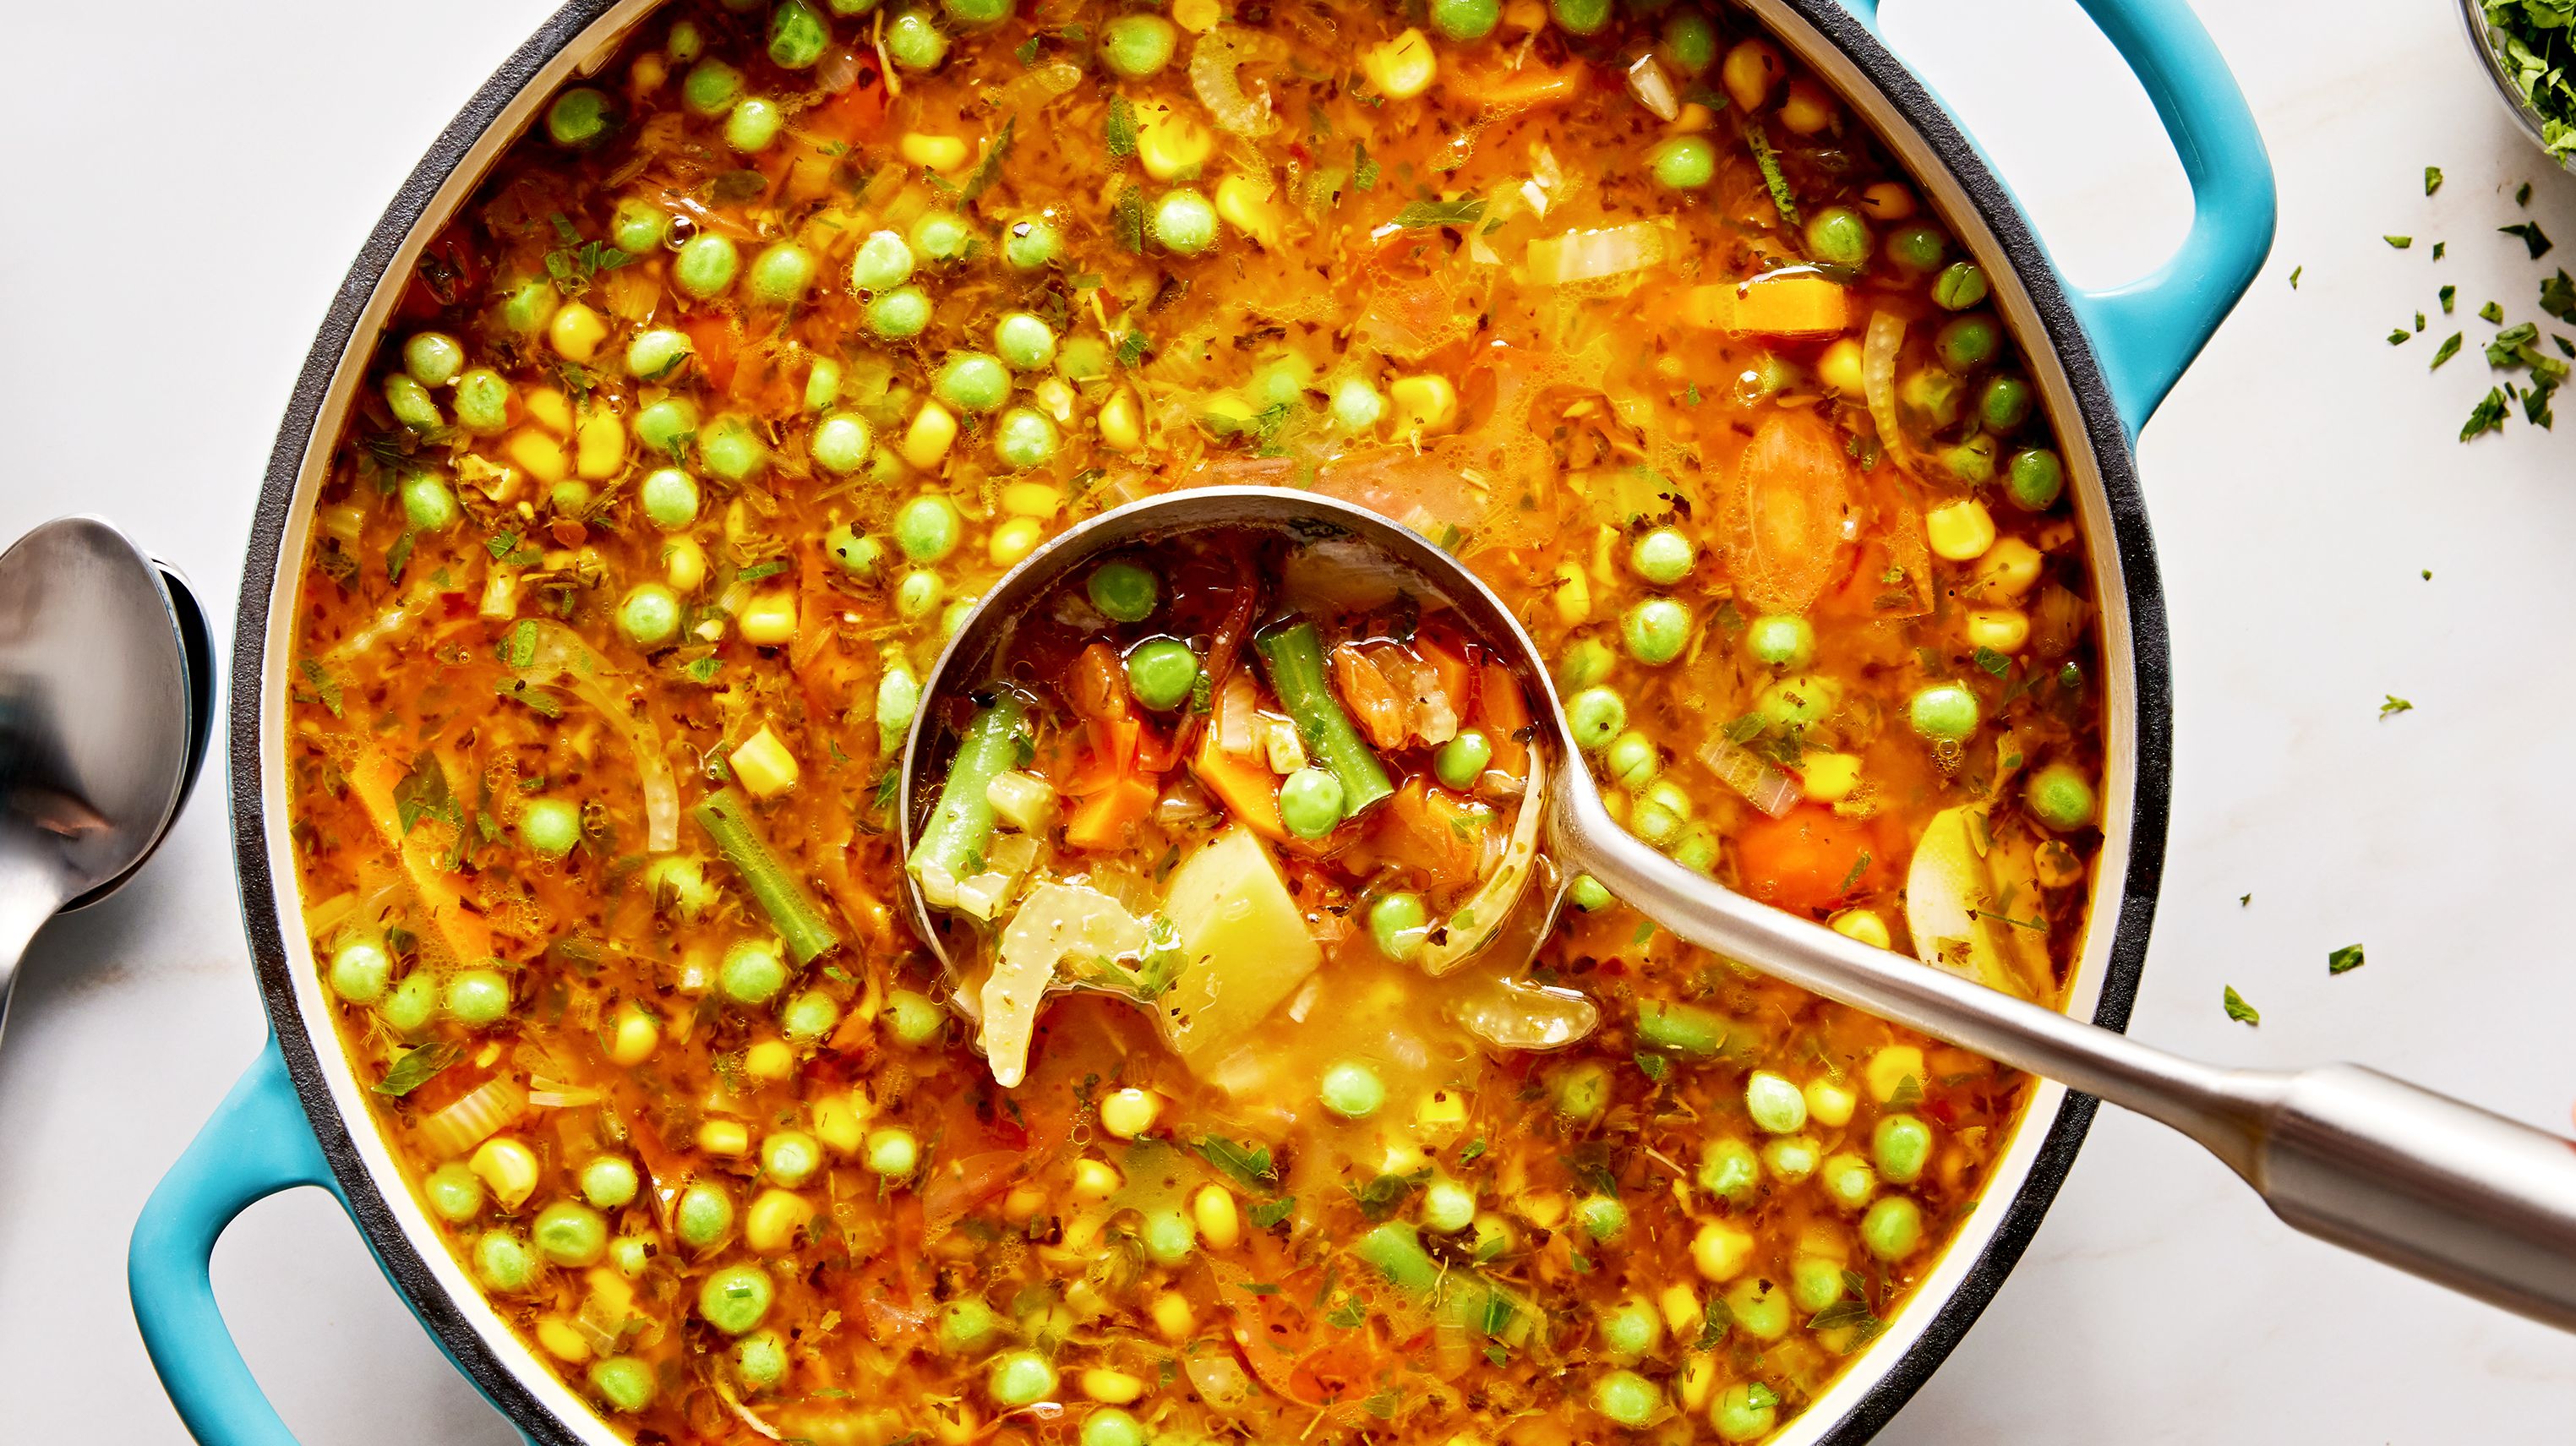 Vegetable Soup Mix - 4 oz - Dried Vegetables for All Kind of Soups 8 oz